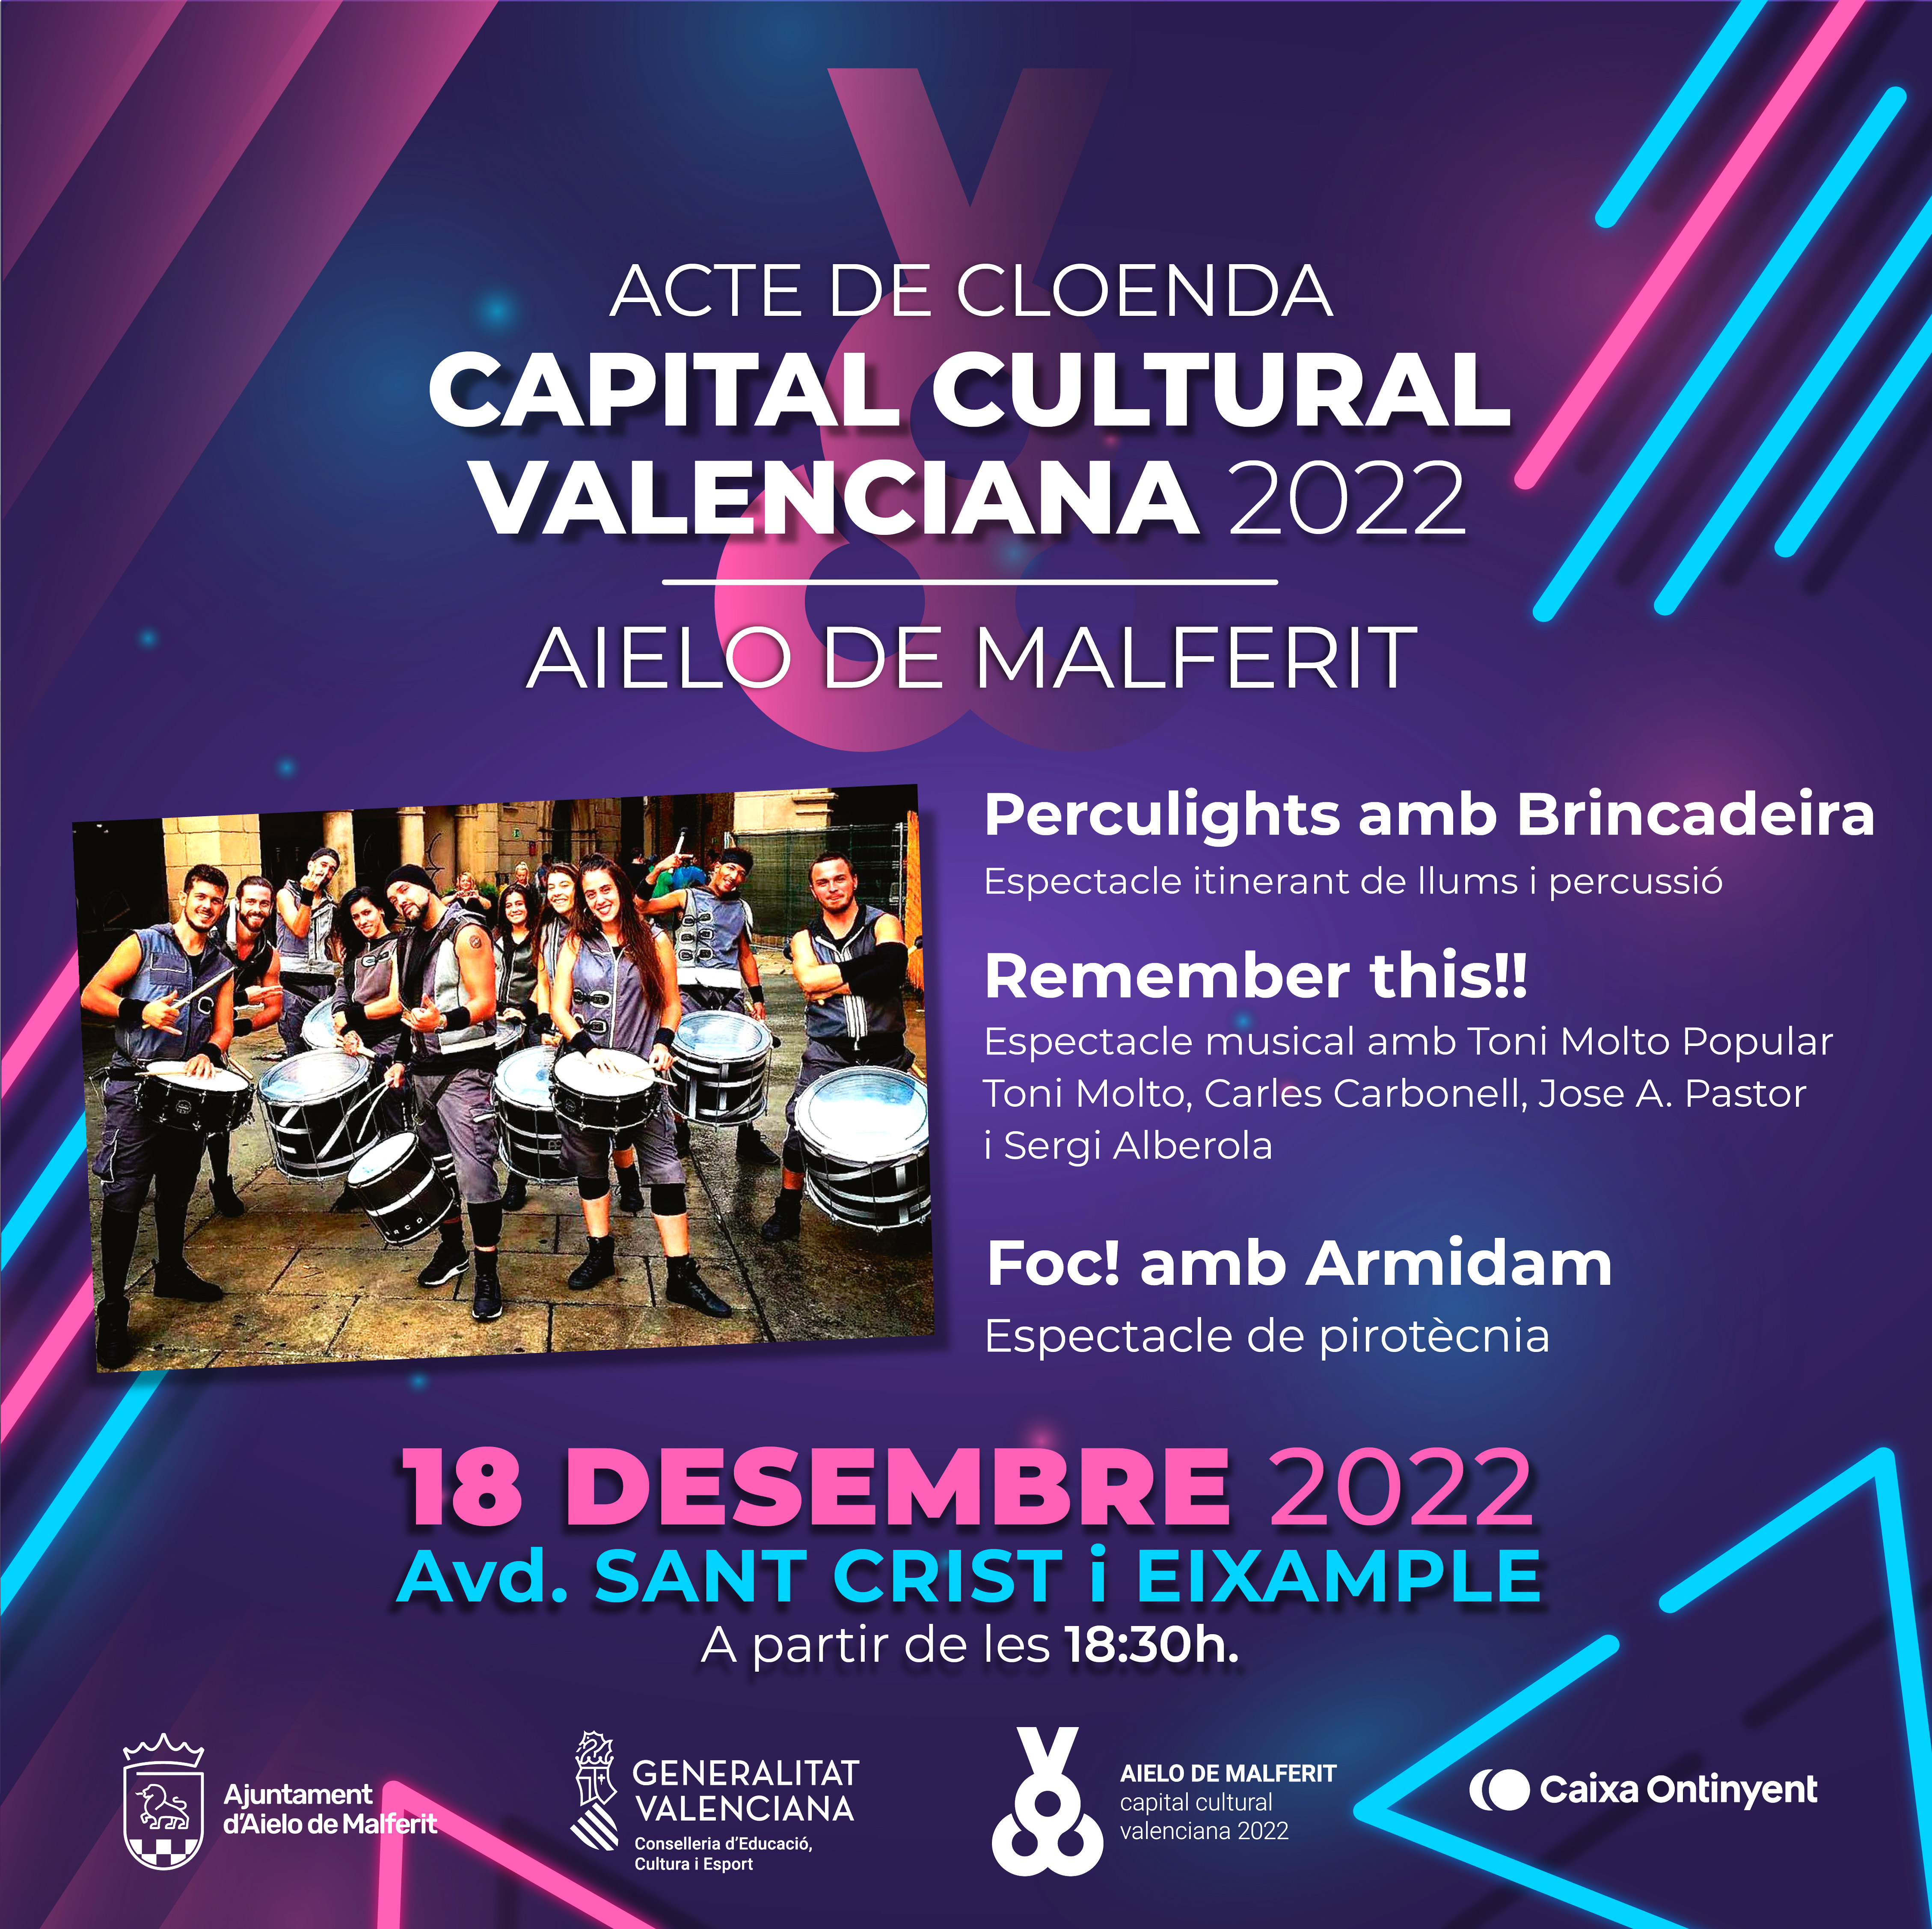 Cloenda Capital Cultural Valenciana 2022 Aielo de Malferit